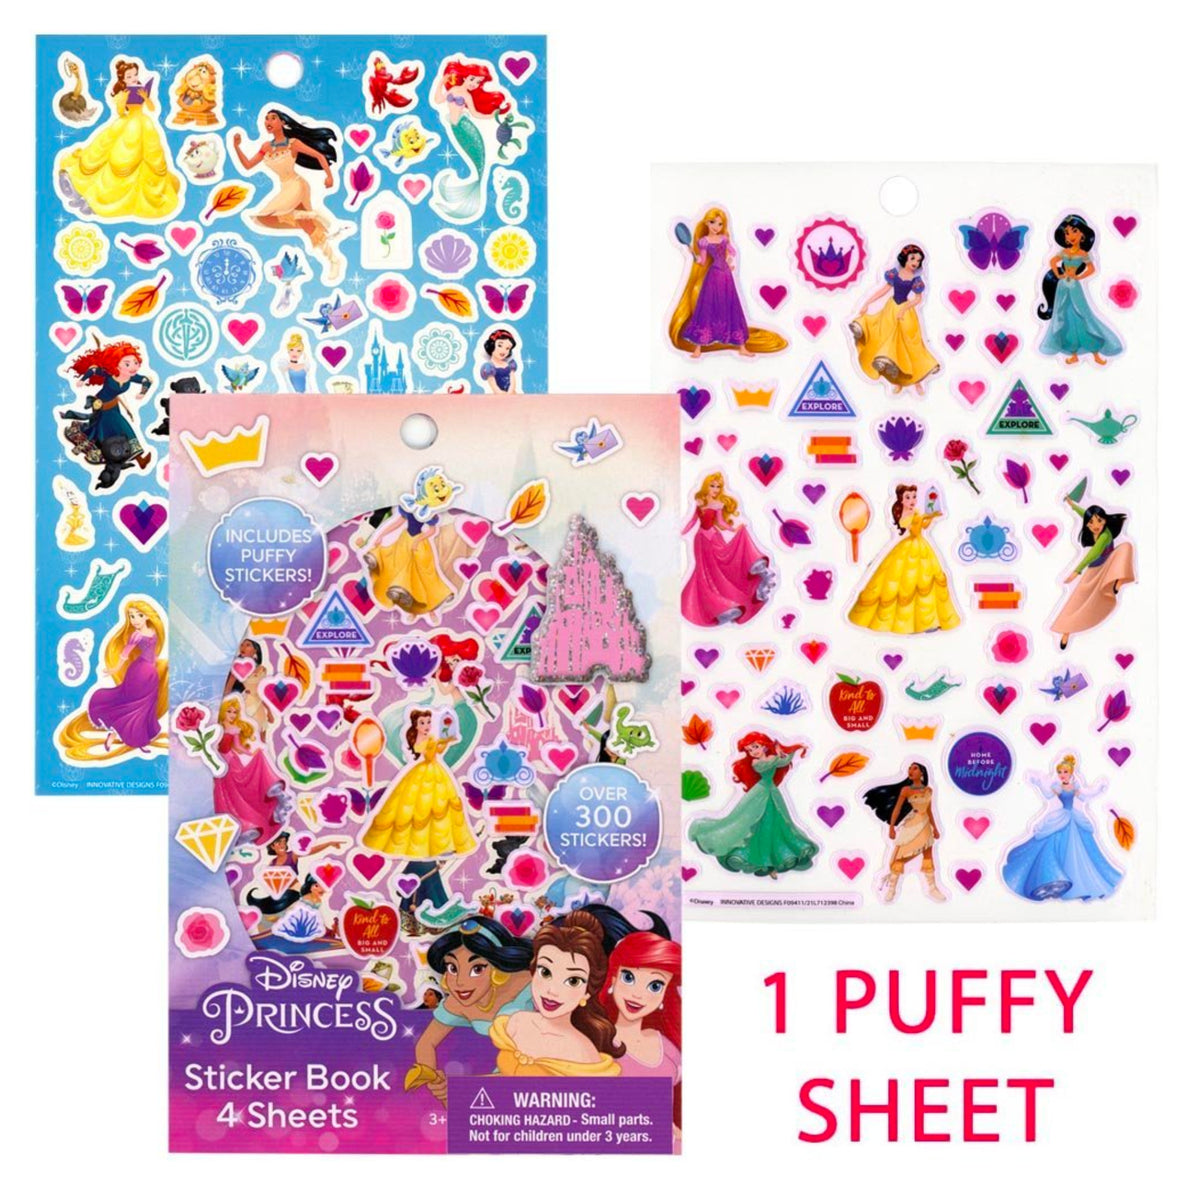 Princess Sticker Book with 1 Puffy Sheet